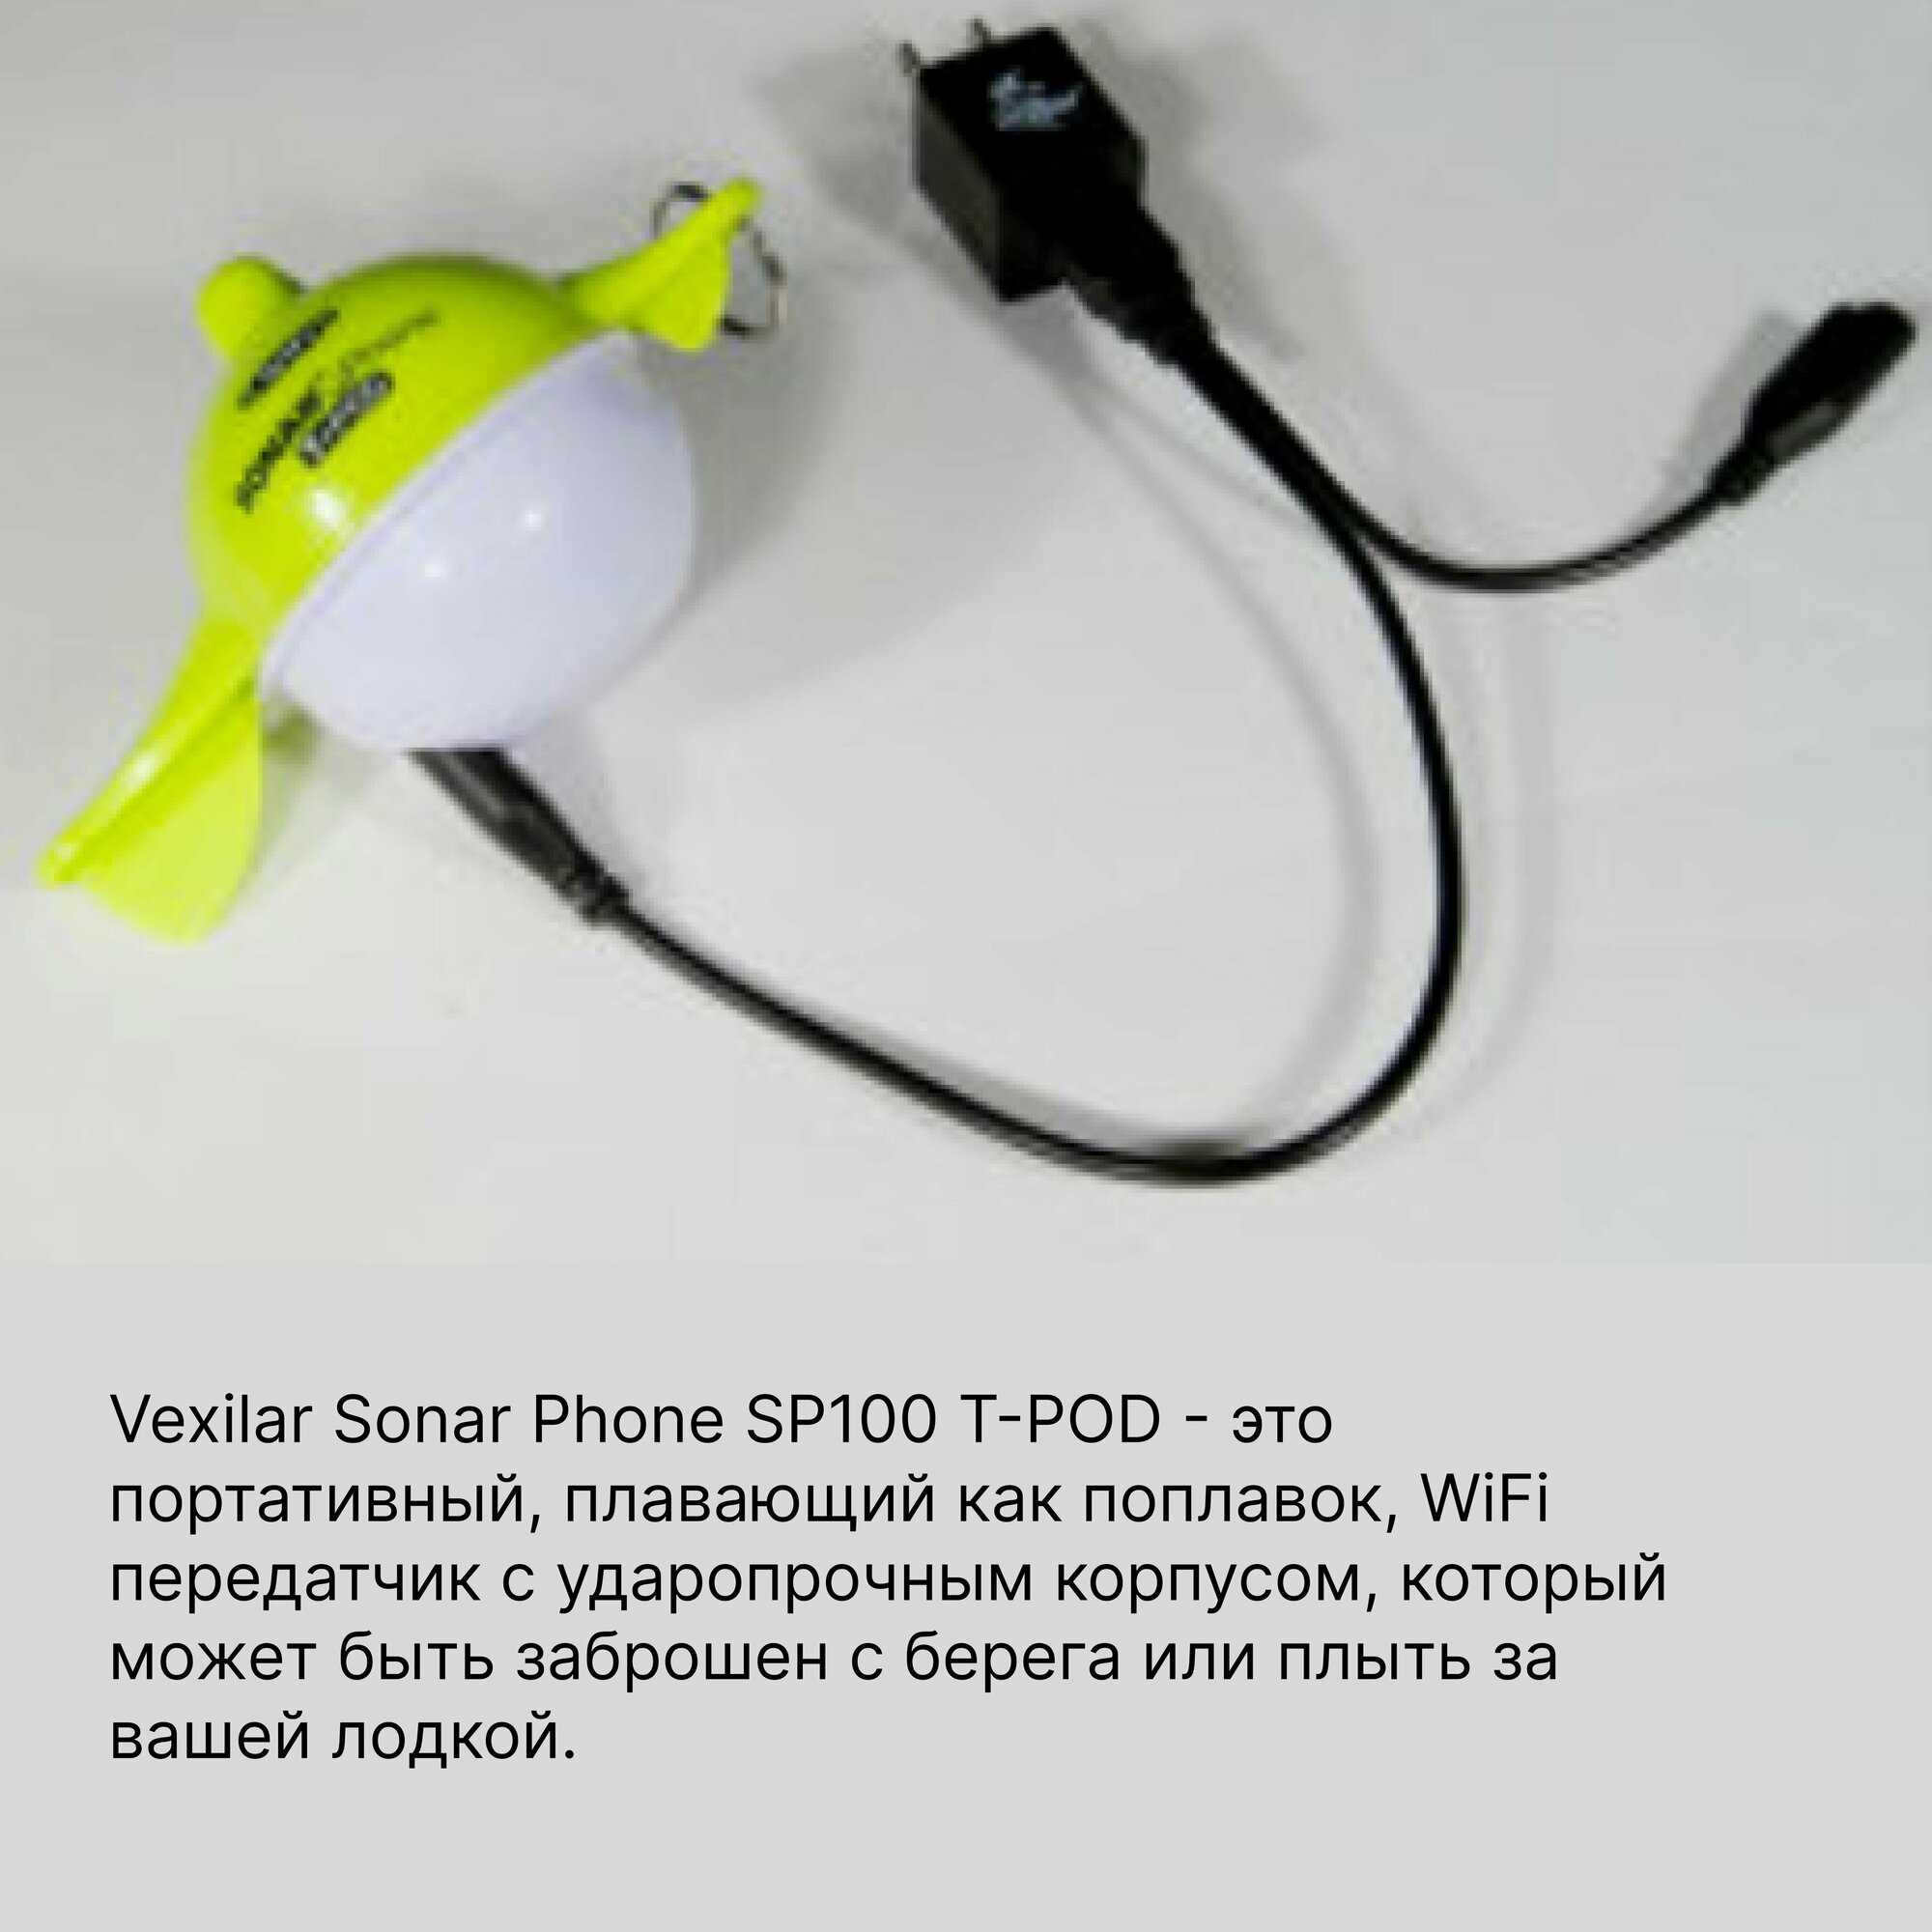 Vexilar Sonar Phone SP100 Т-POD беспроводнои Wi-Fi эхолот